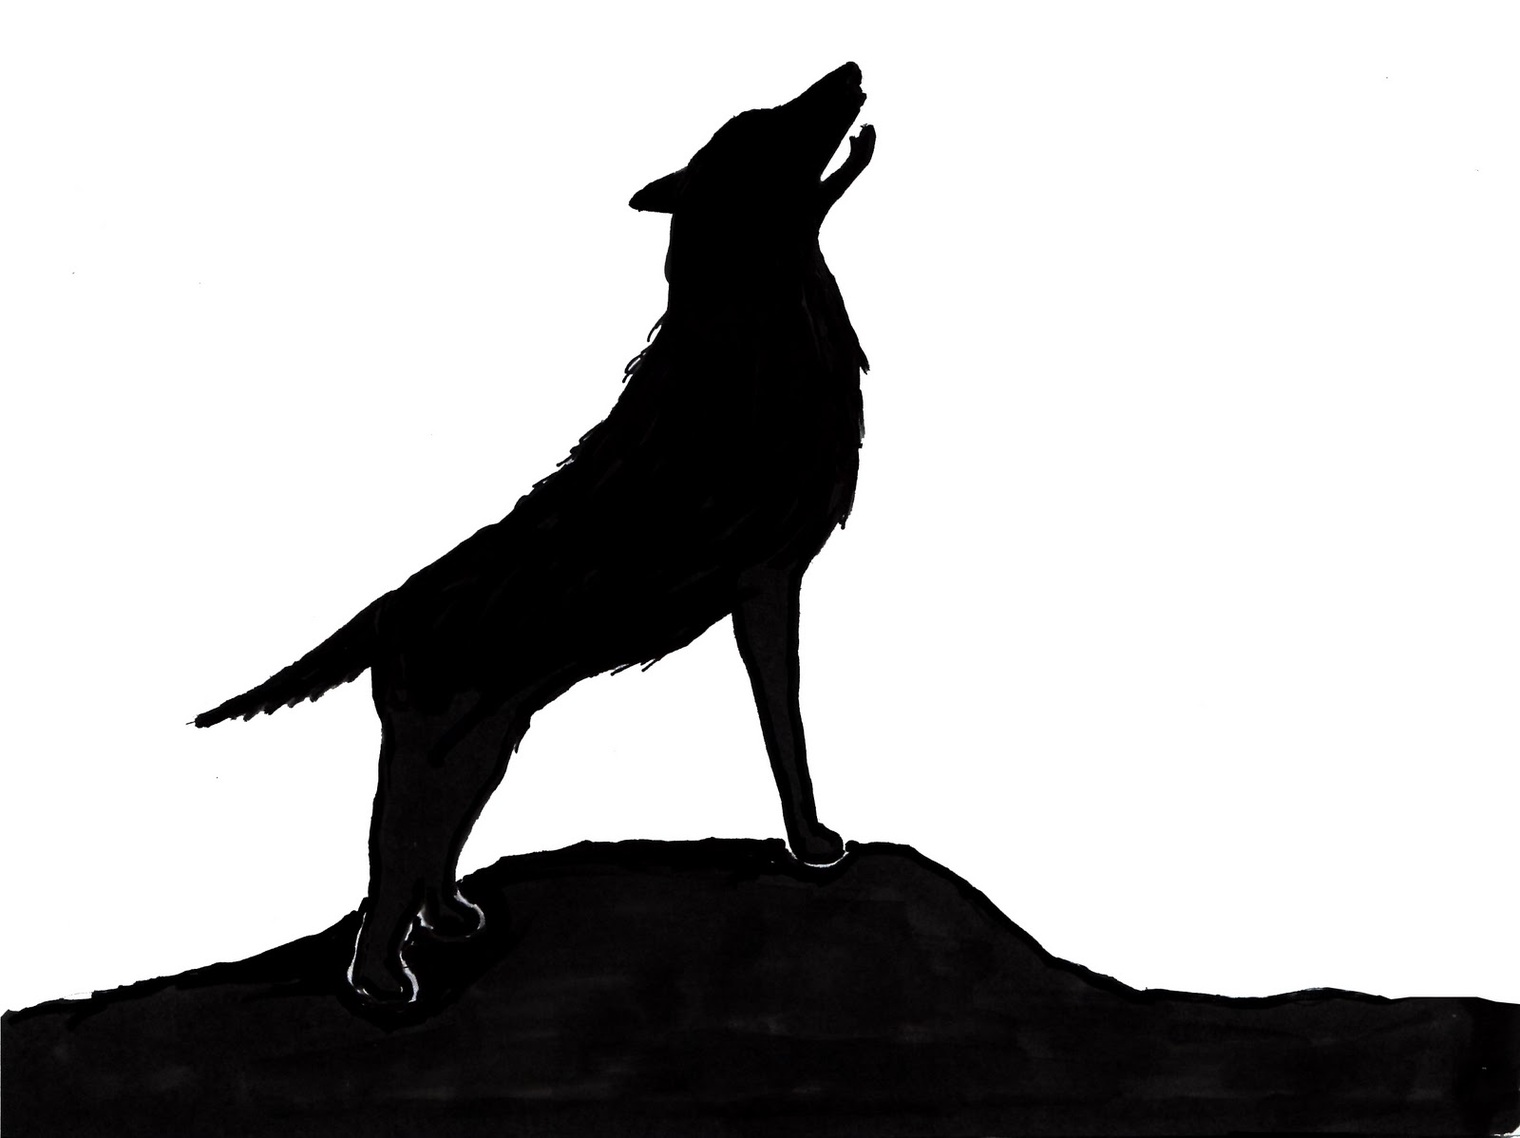 Clipart wolf head silhouette